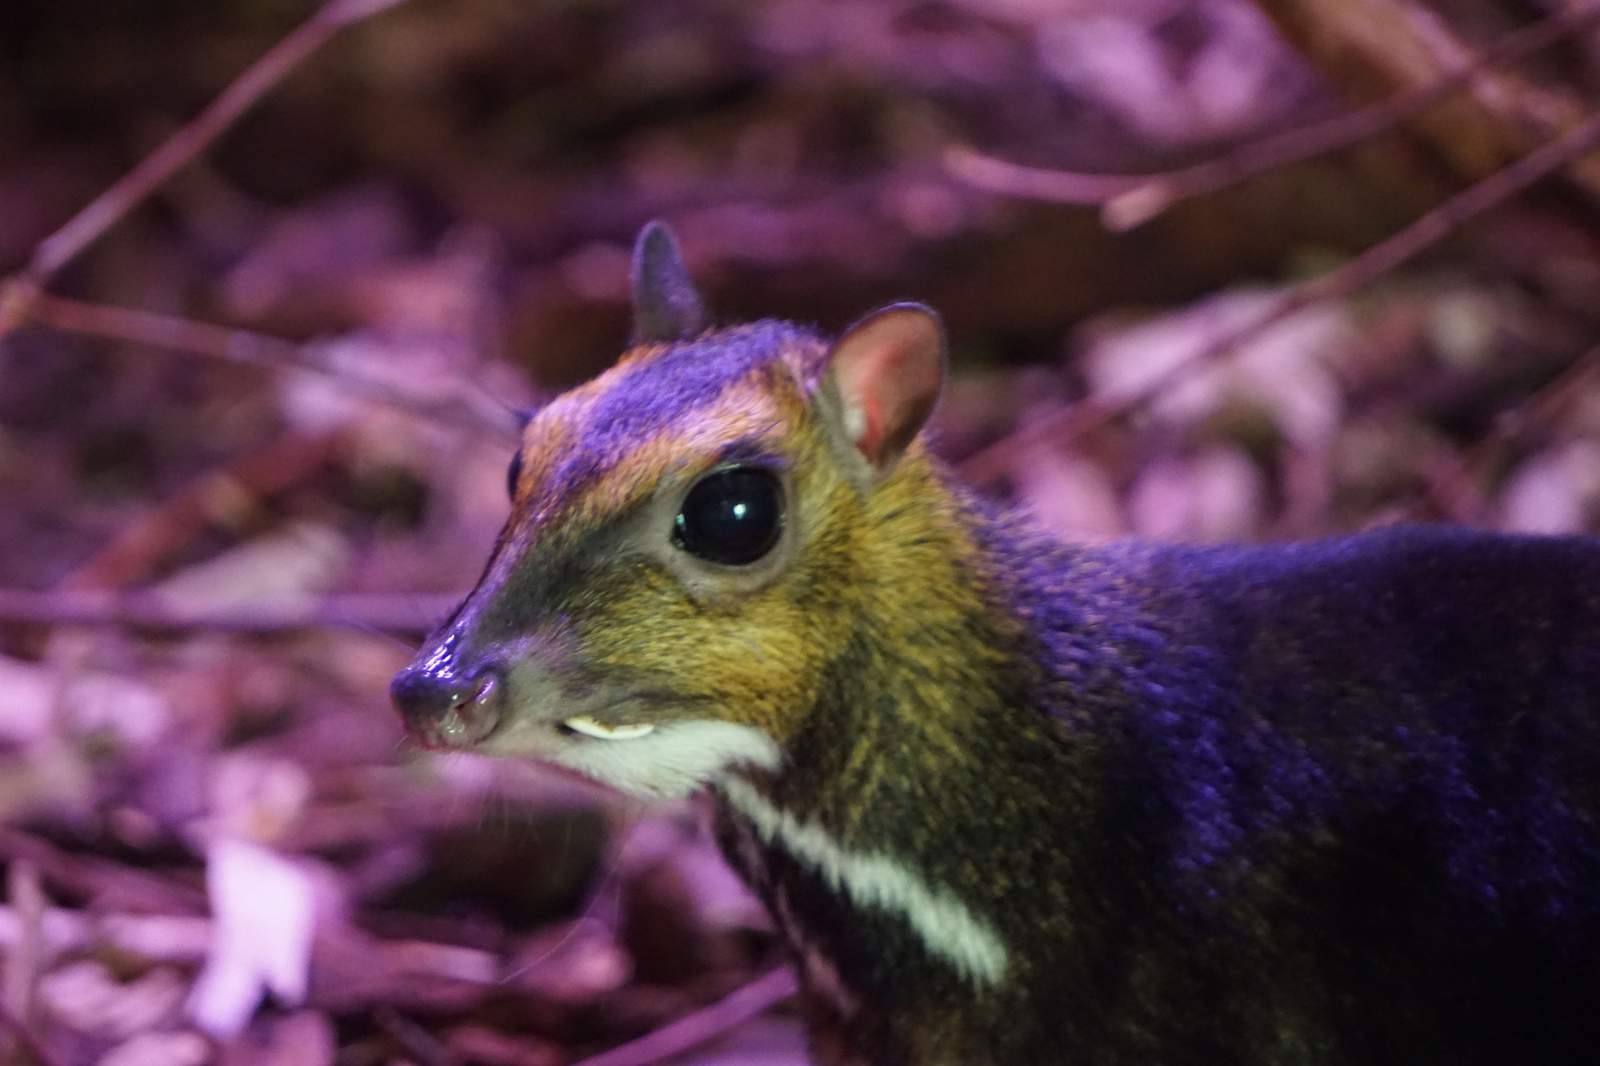 Polish zoo captures rare mouse-deer birth on video